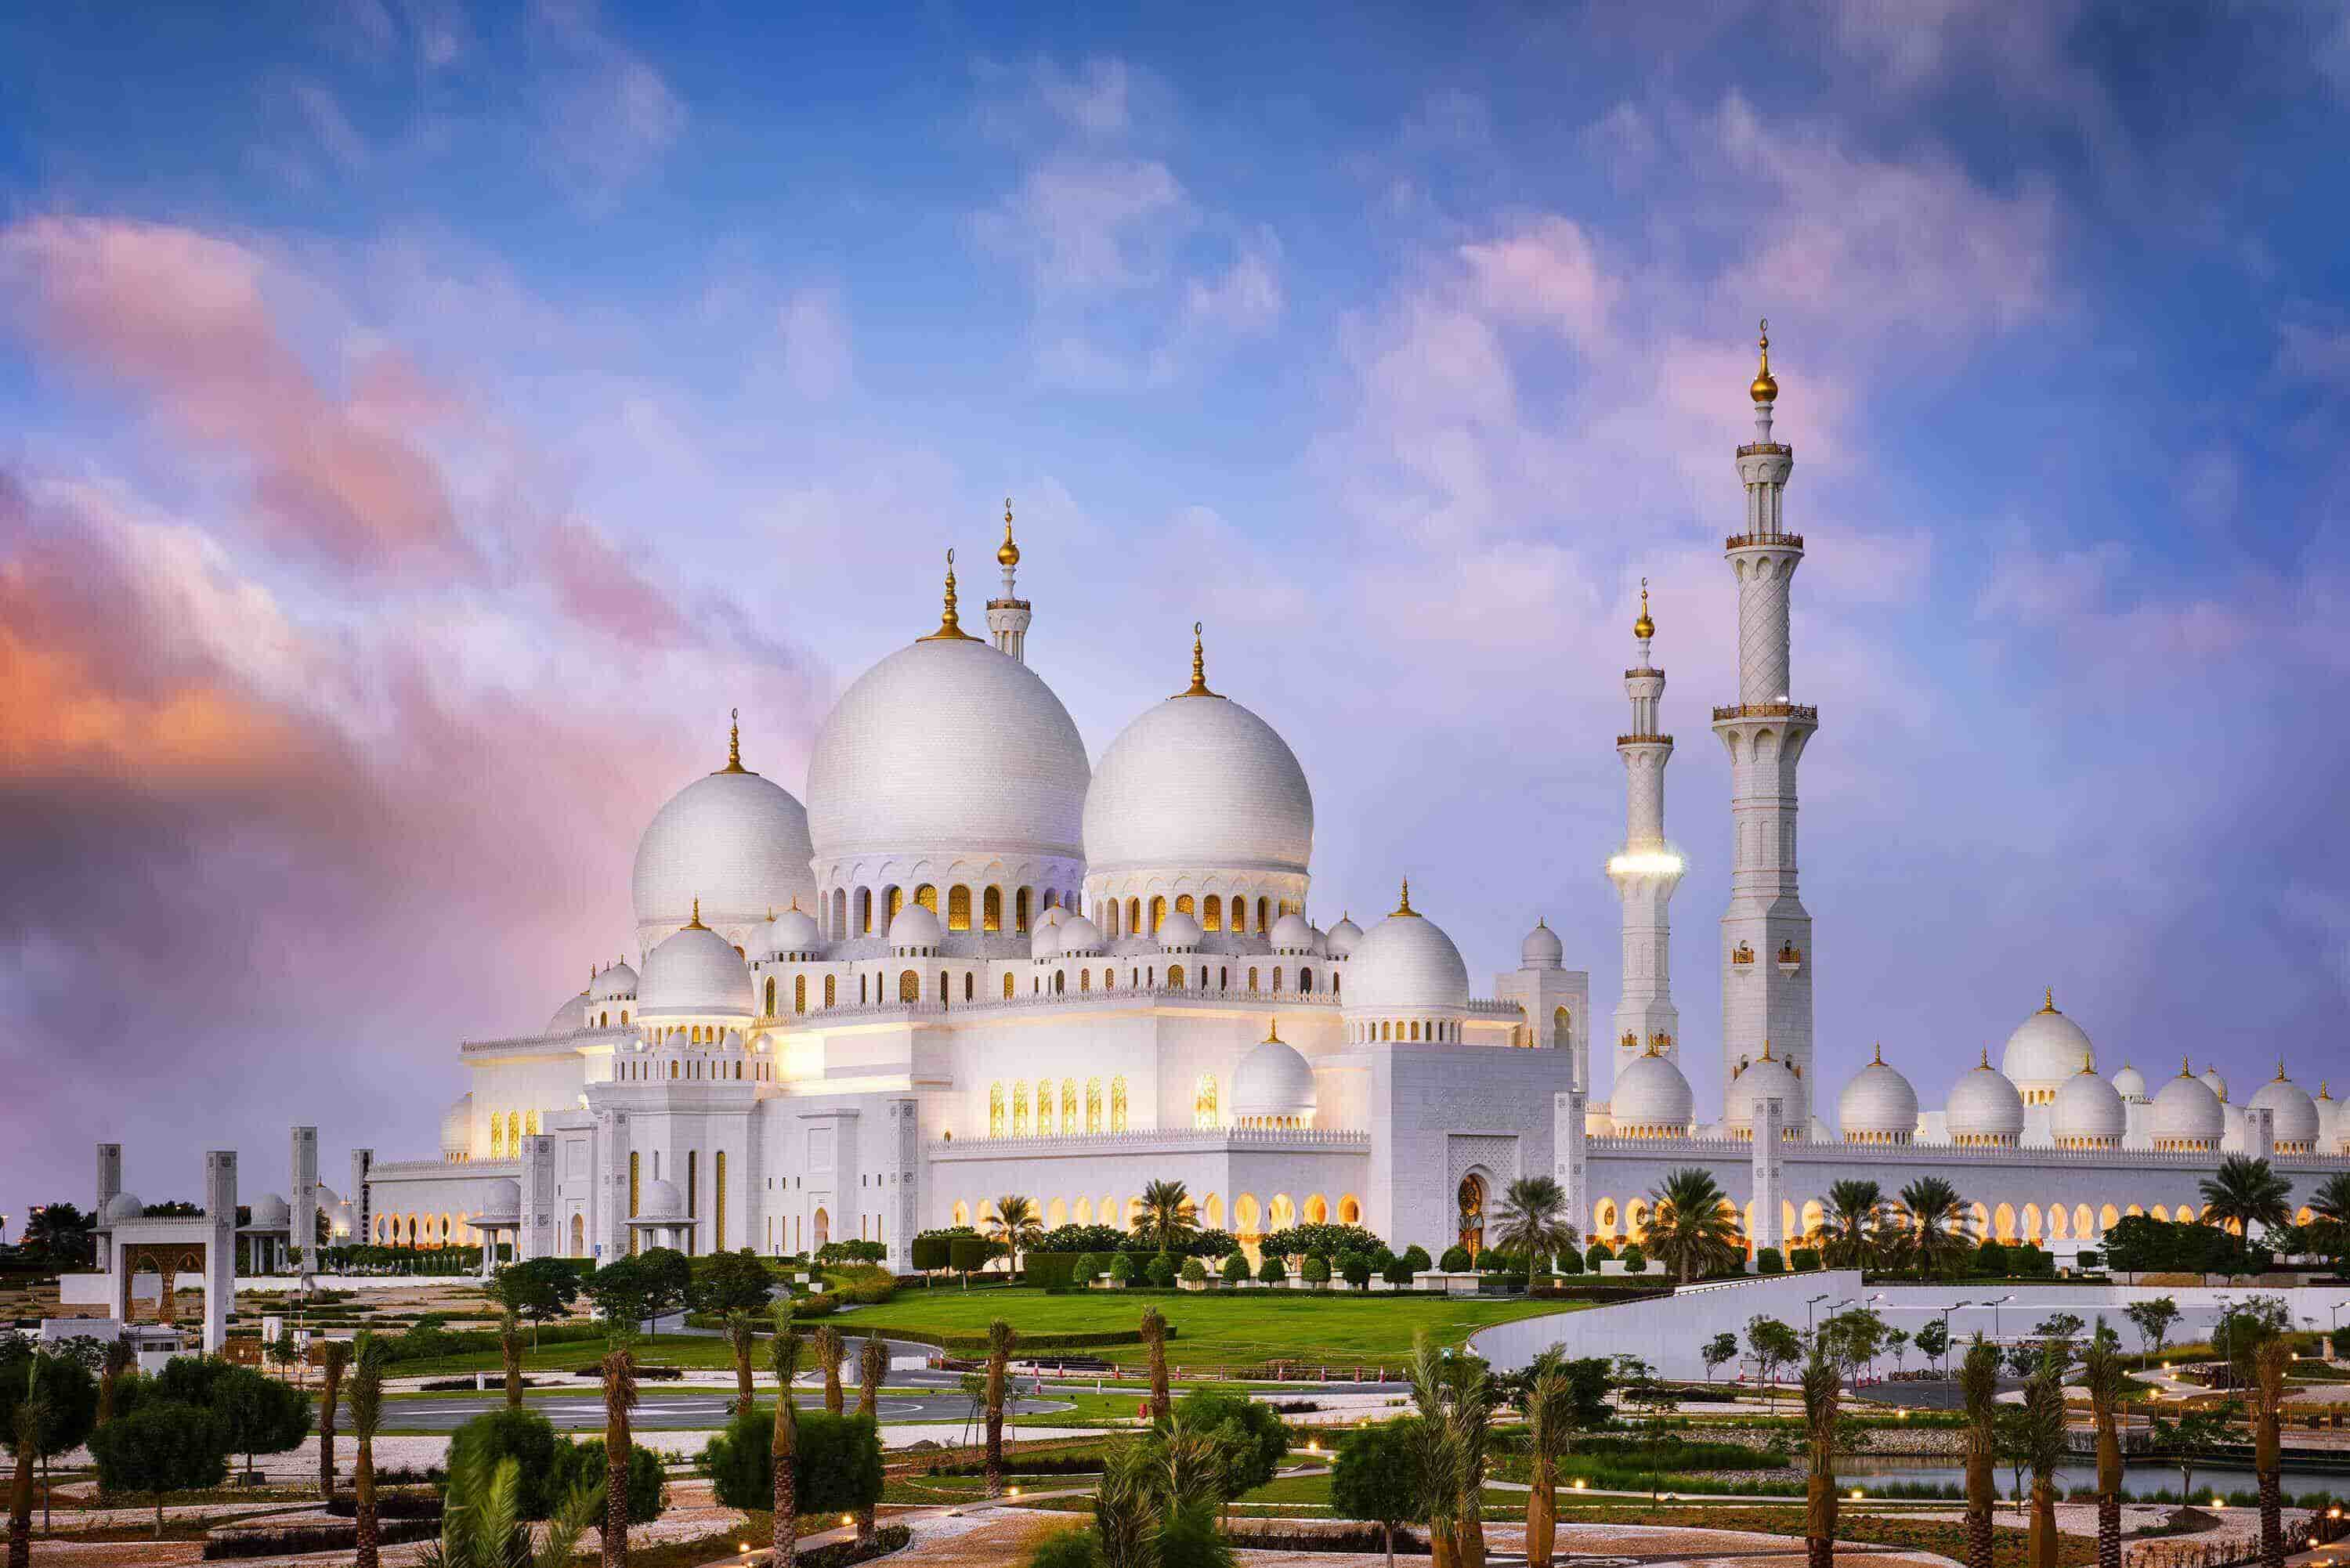 Shaikh Zayed Mosque